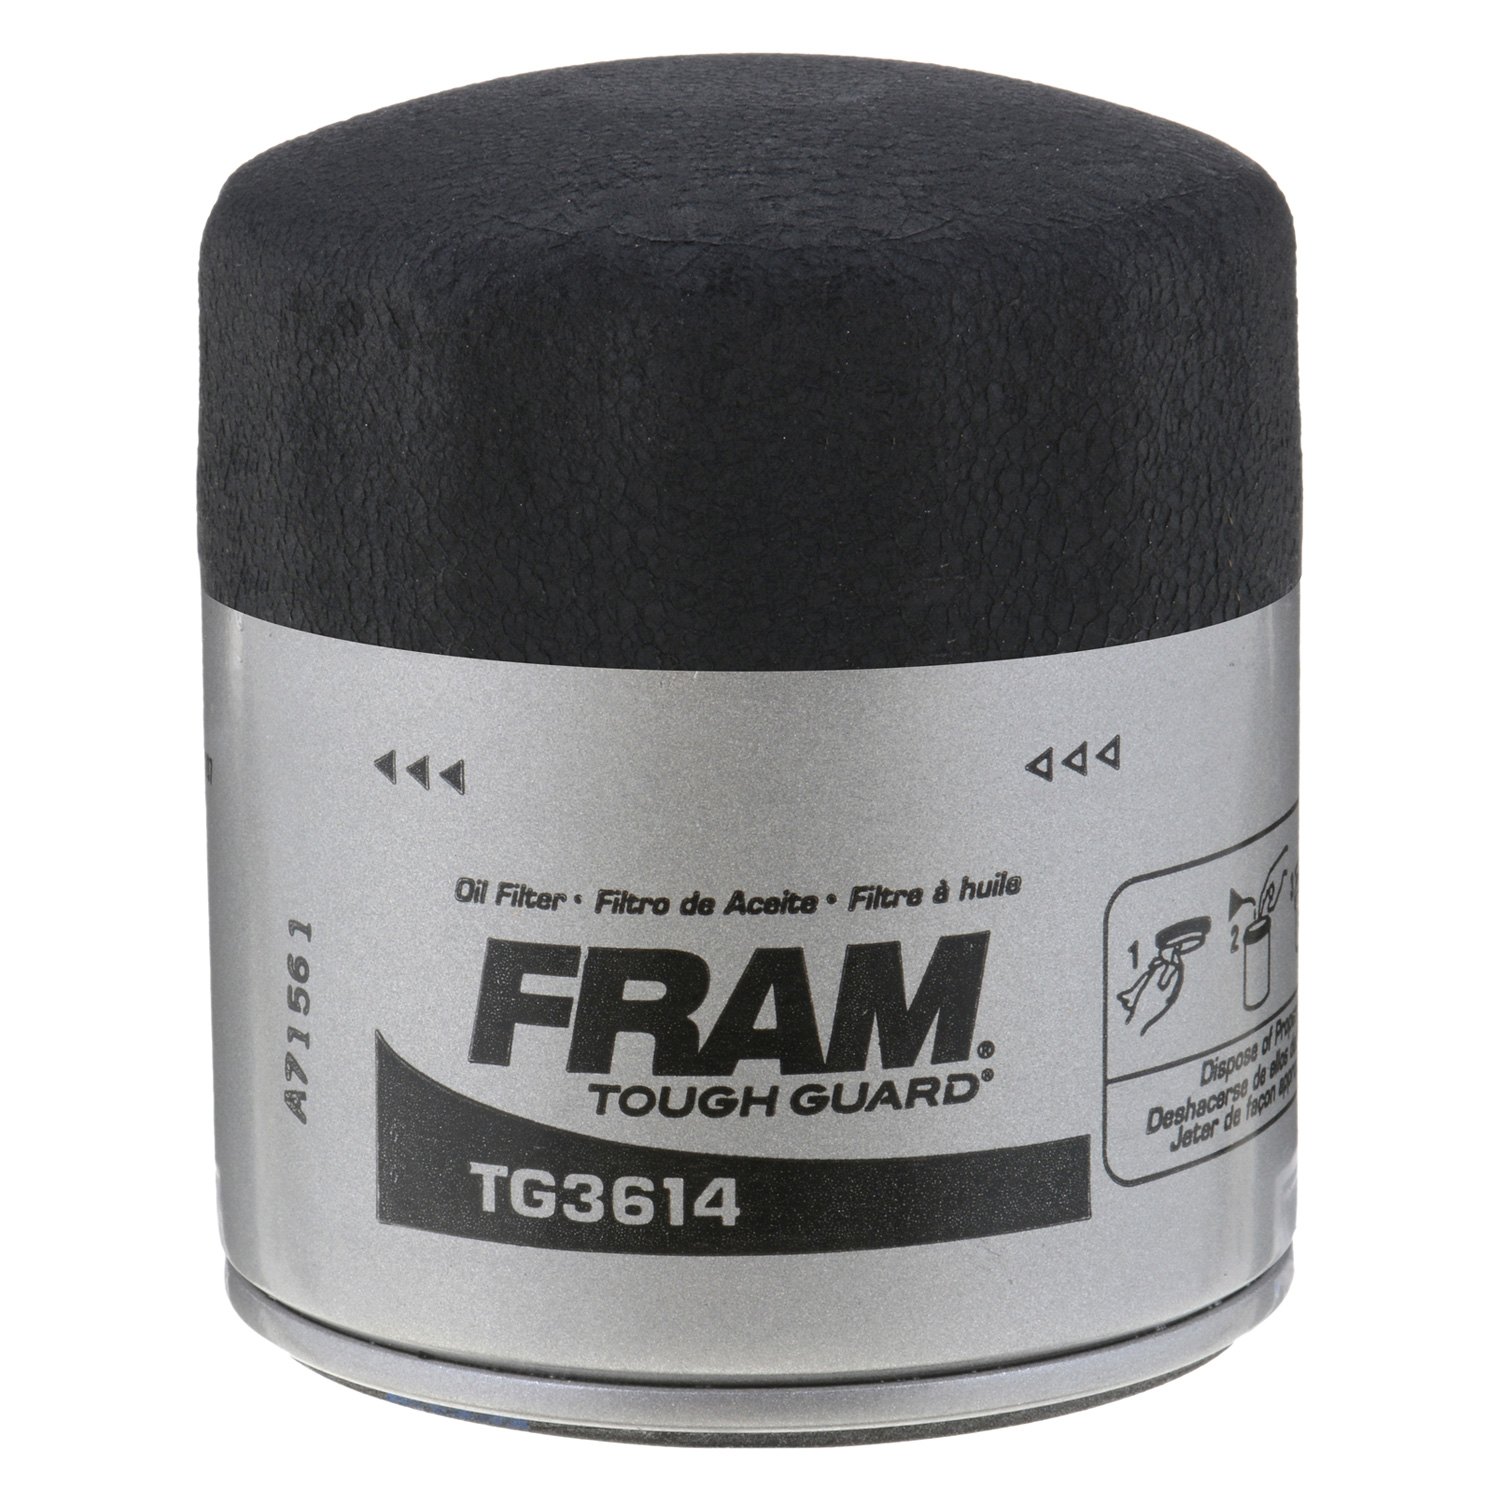 Fram Tg3614 Tough Guard Spin On Oil Filter